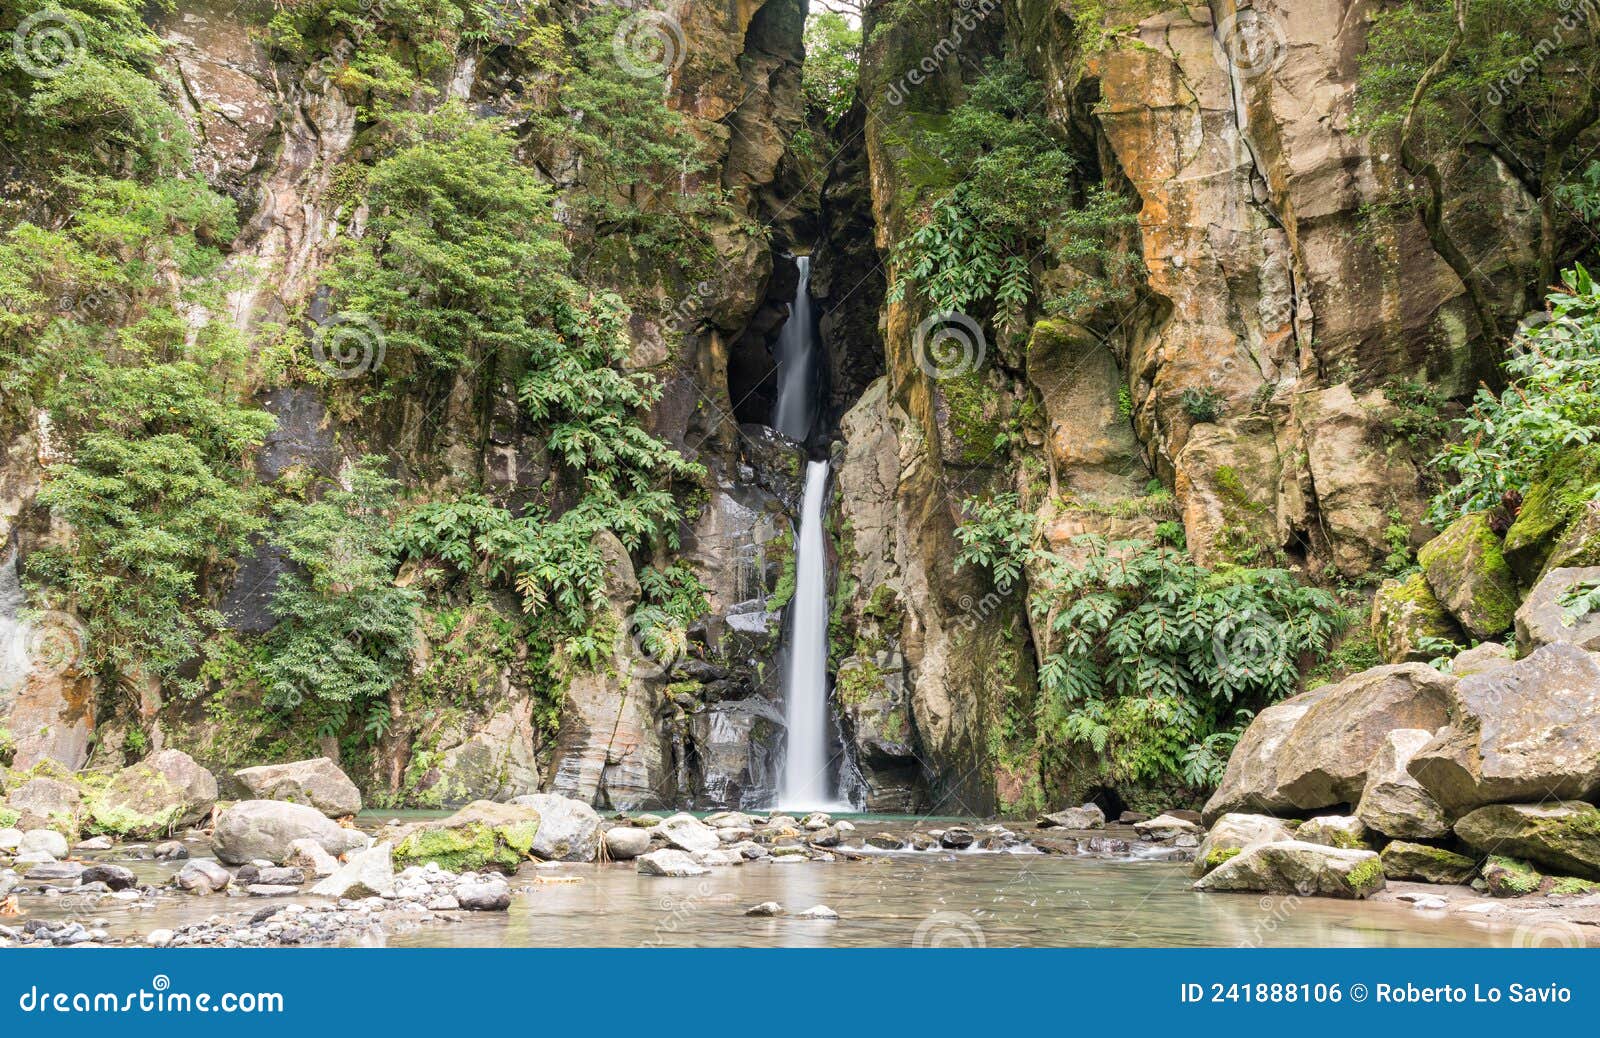 the waterfall salto do cabrito in the sao miguel island azores, portugal